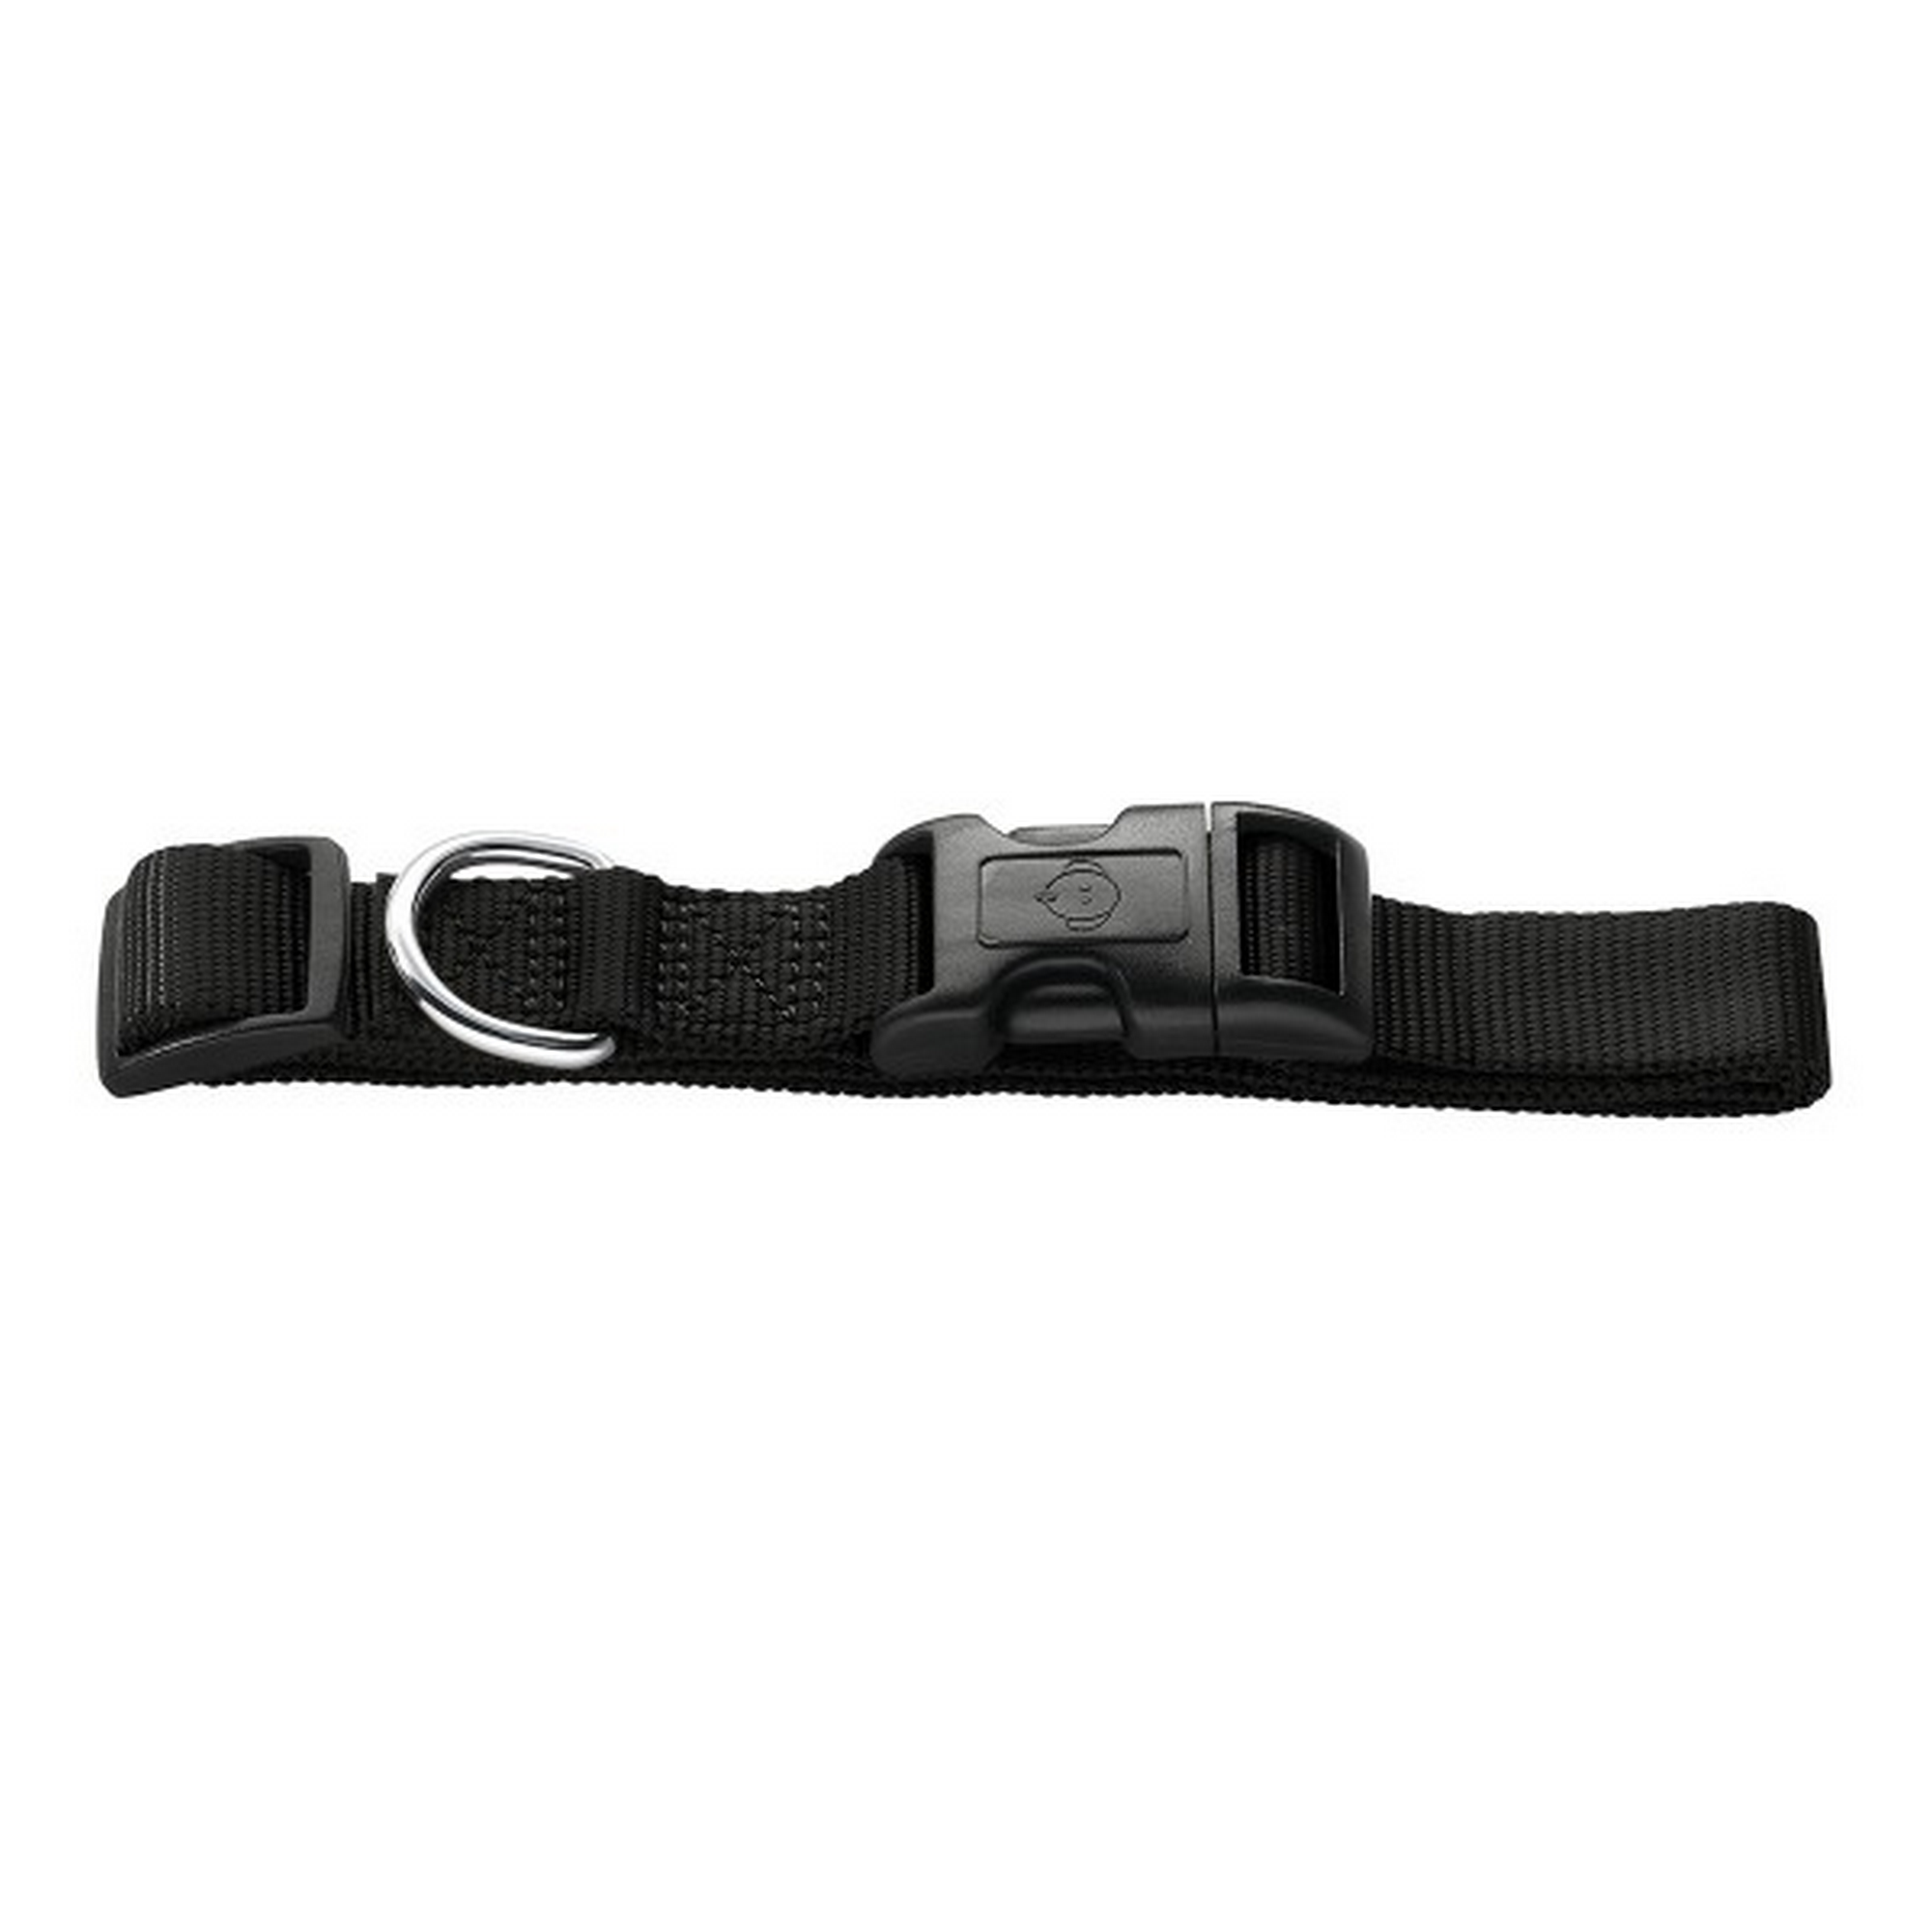 Hunde-Halsband 'Ecco Sport' schwarz, Größe S, 30-45 cm + product picture